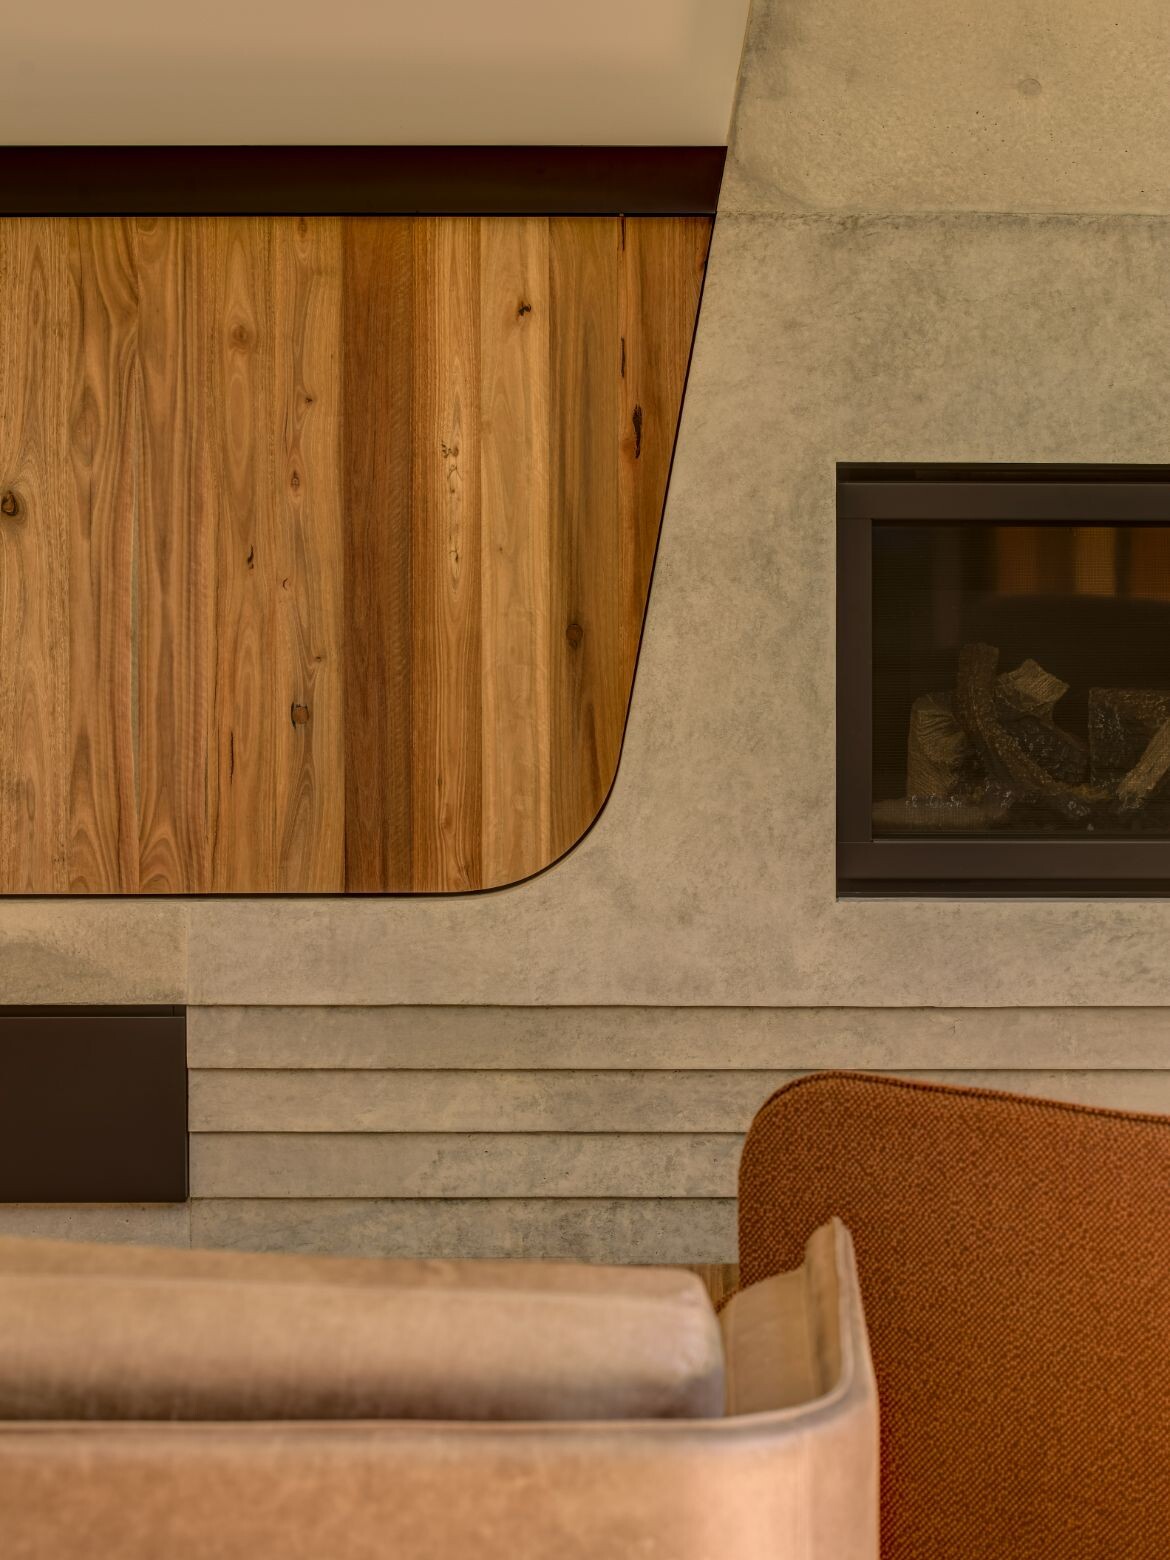 A fireplace detail